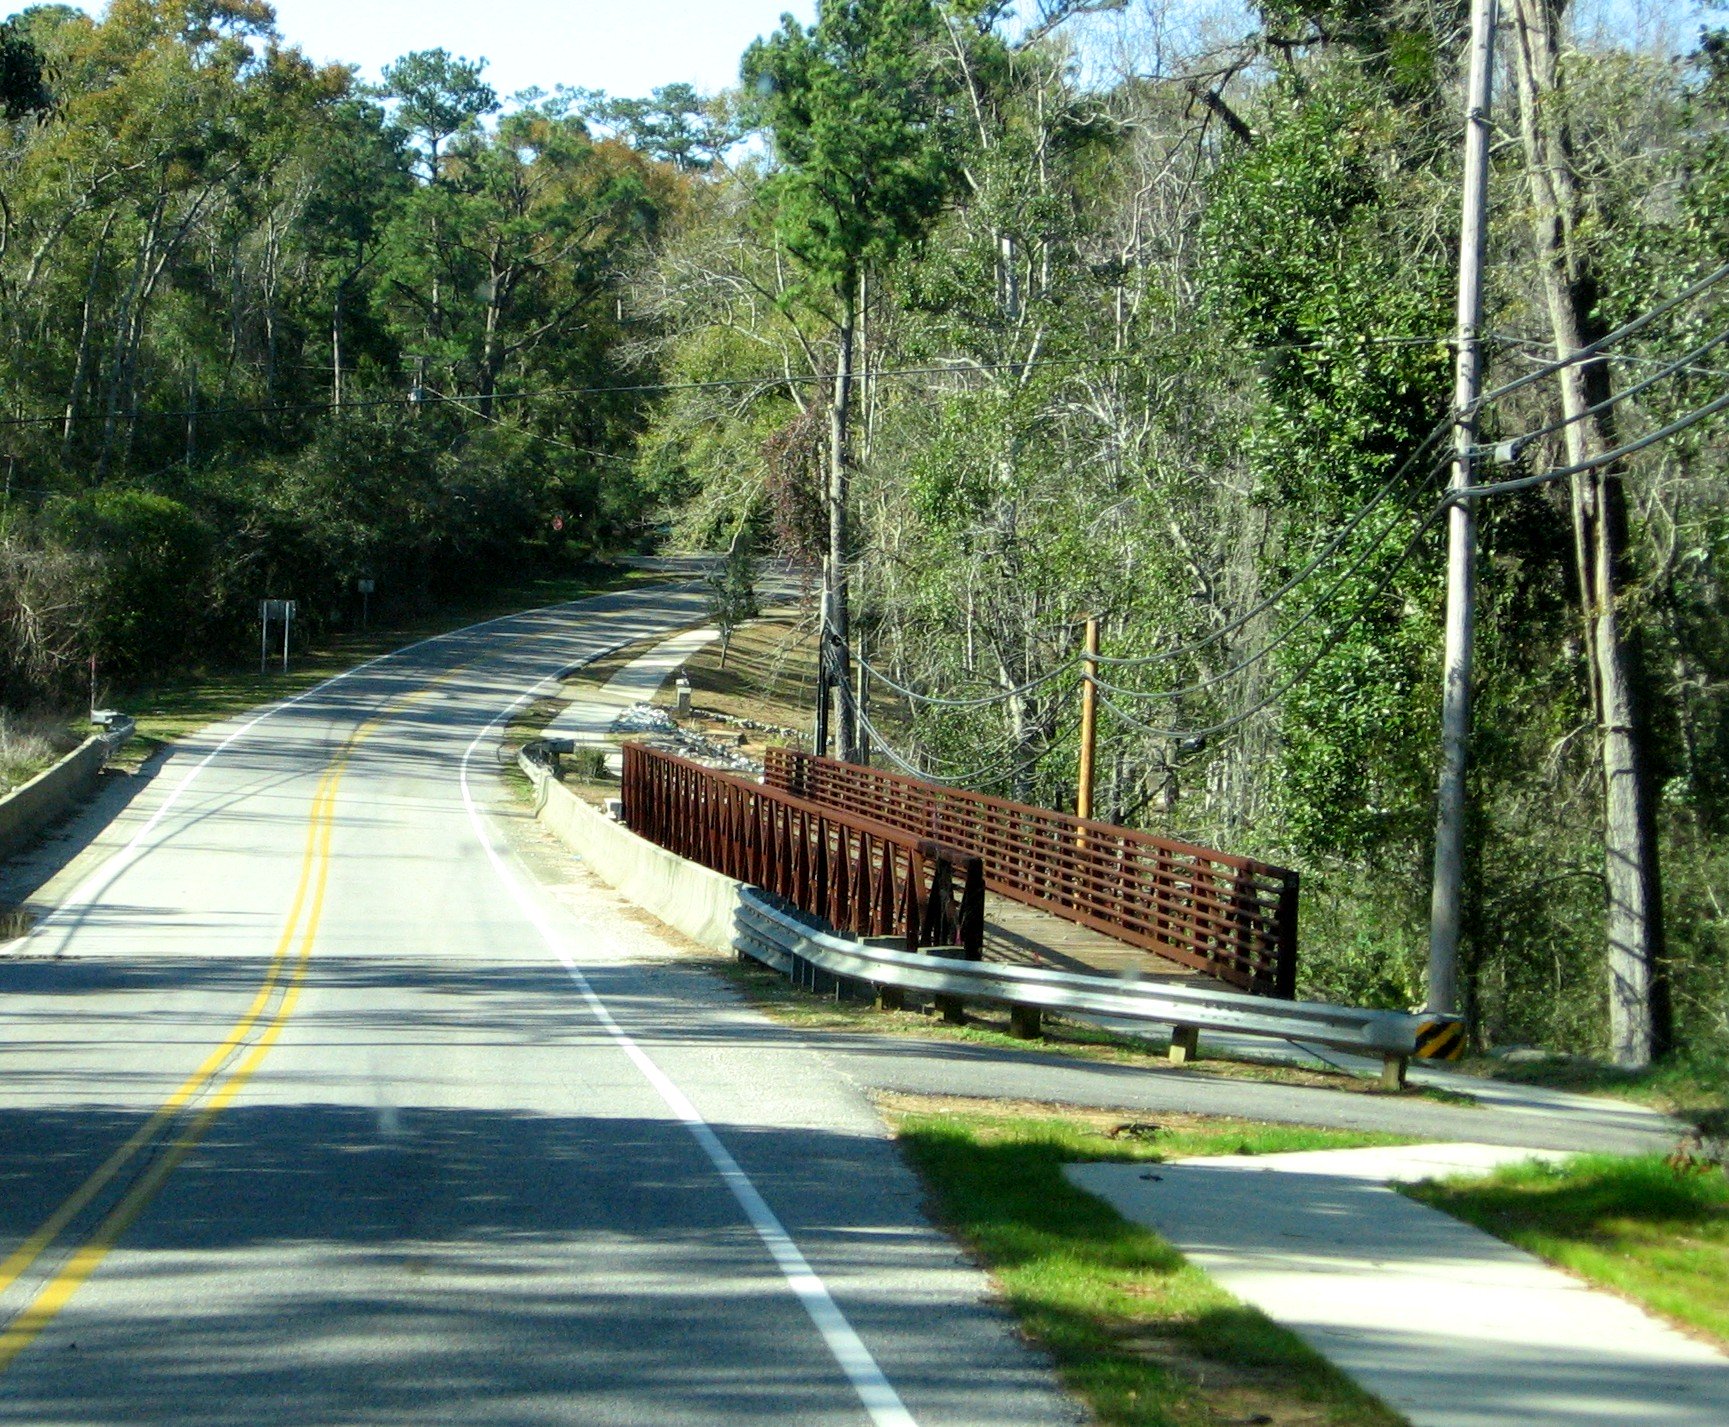 The Alabama Coastal Connection Road